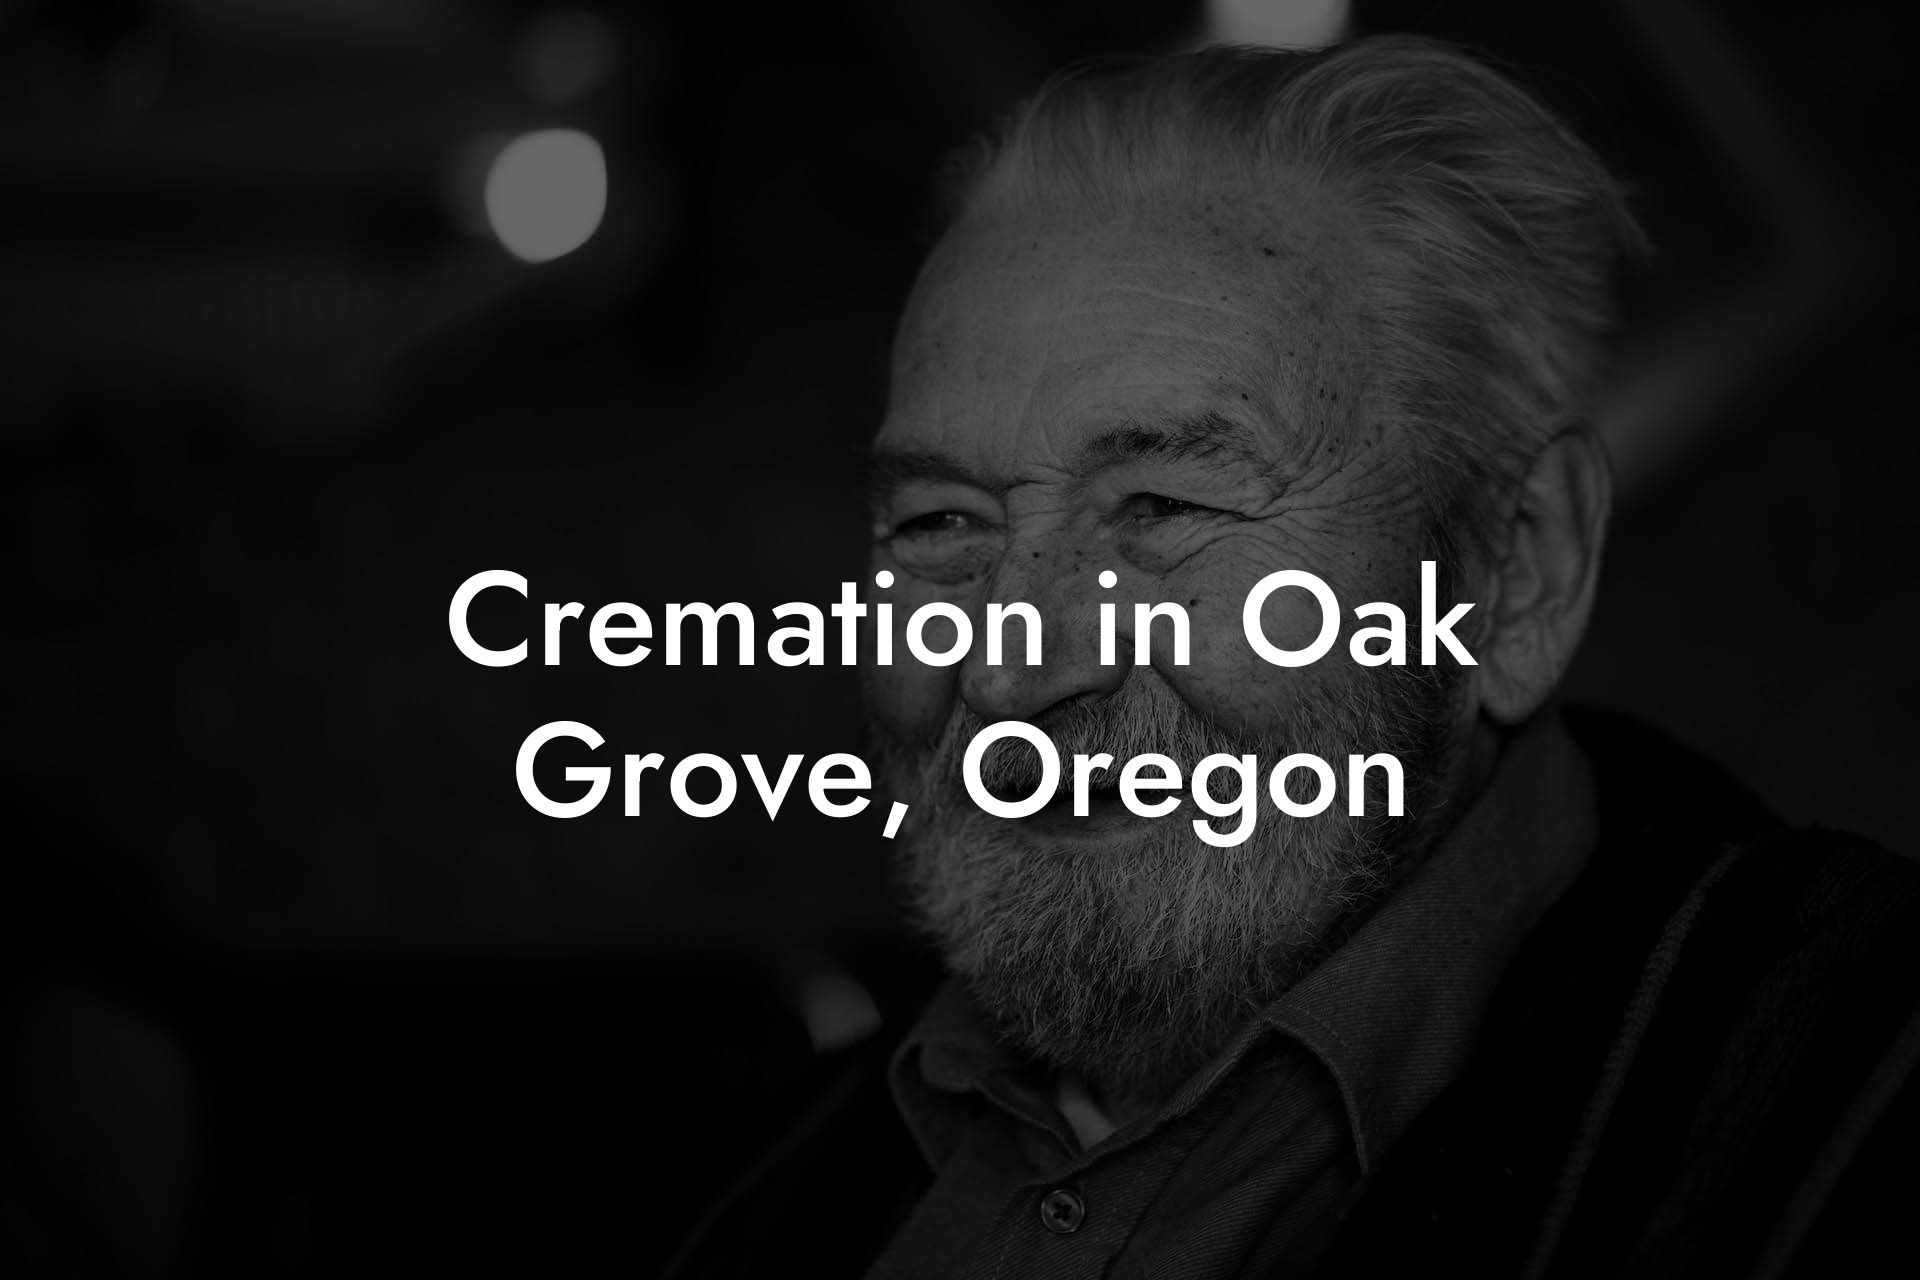 Cremation in Oak Grove, Oregon